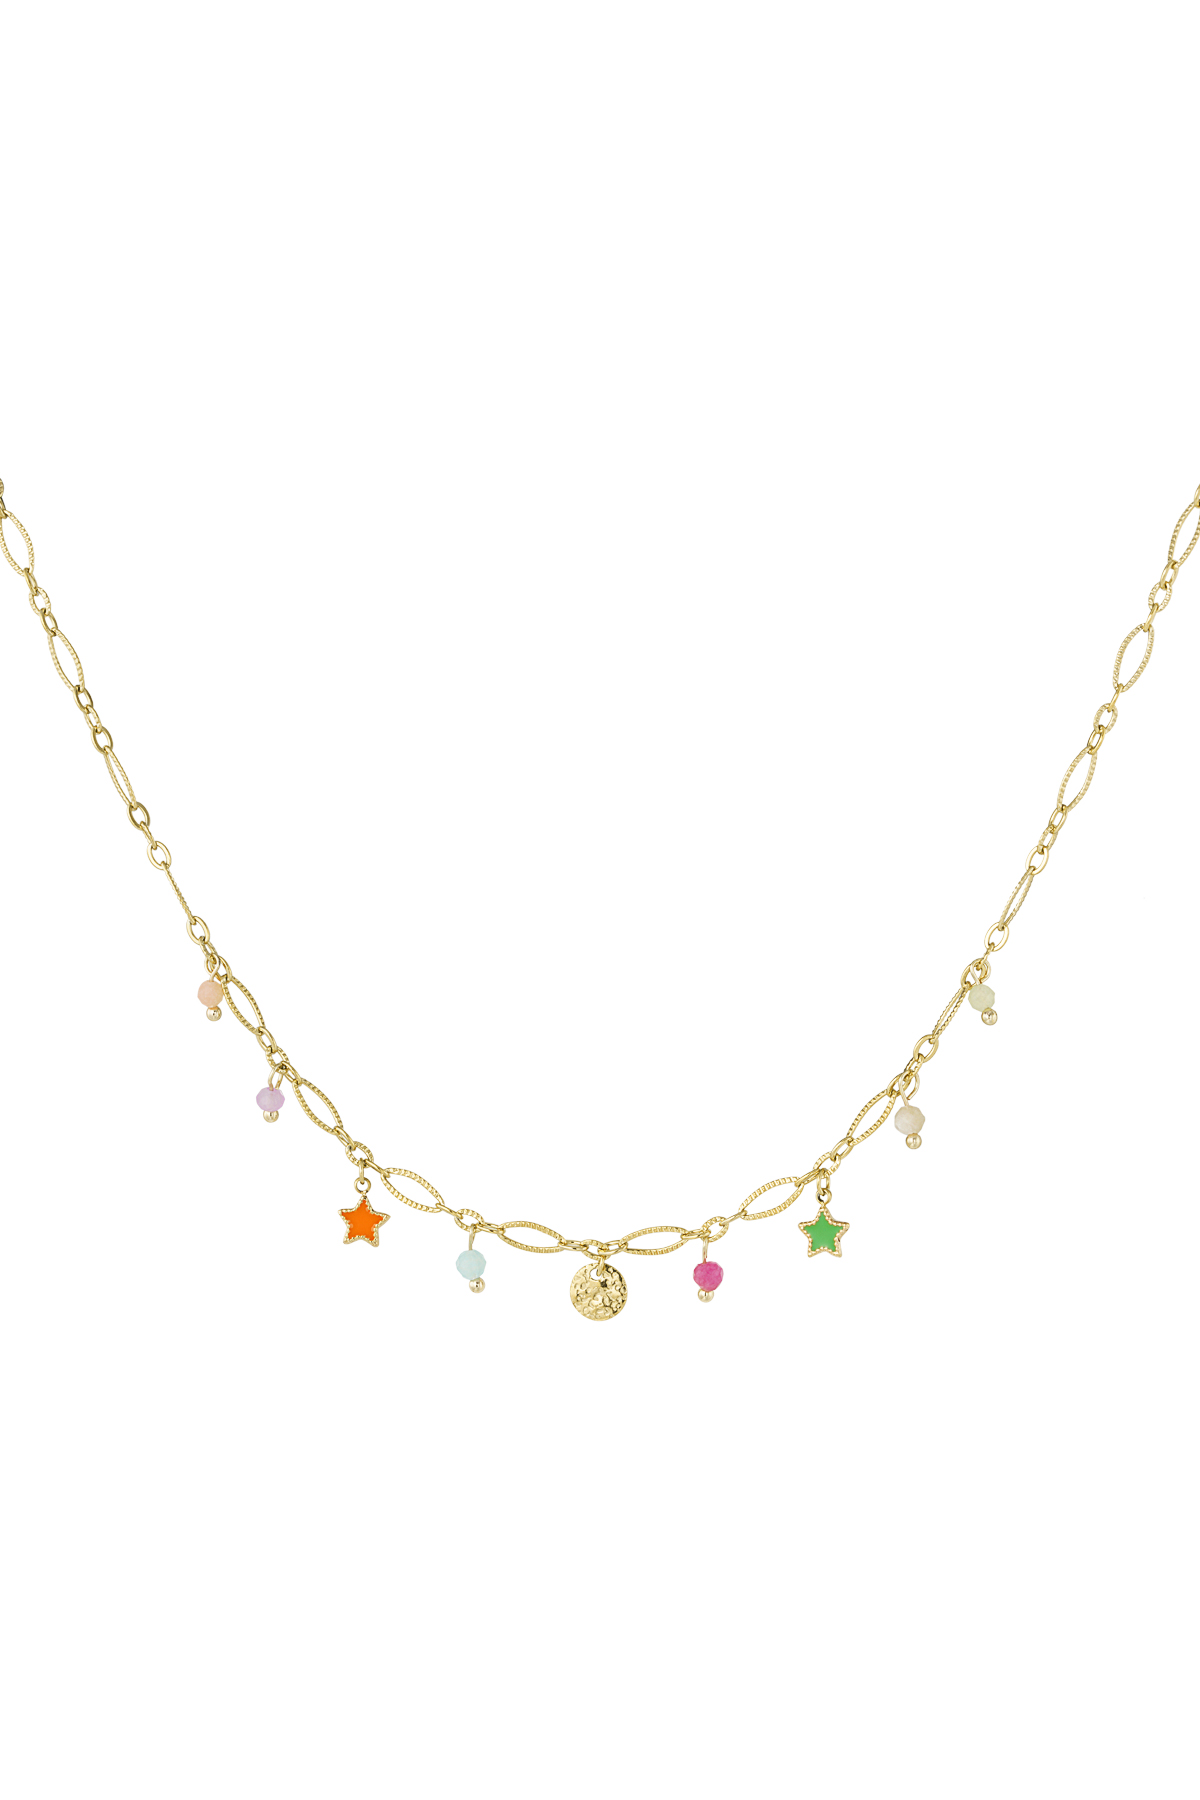 Sparkle party charm necklace - gold  h5 